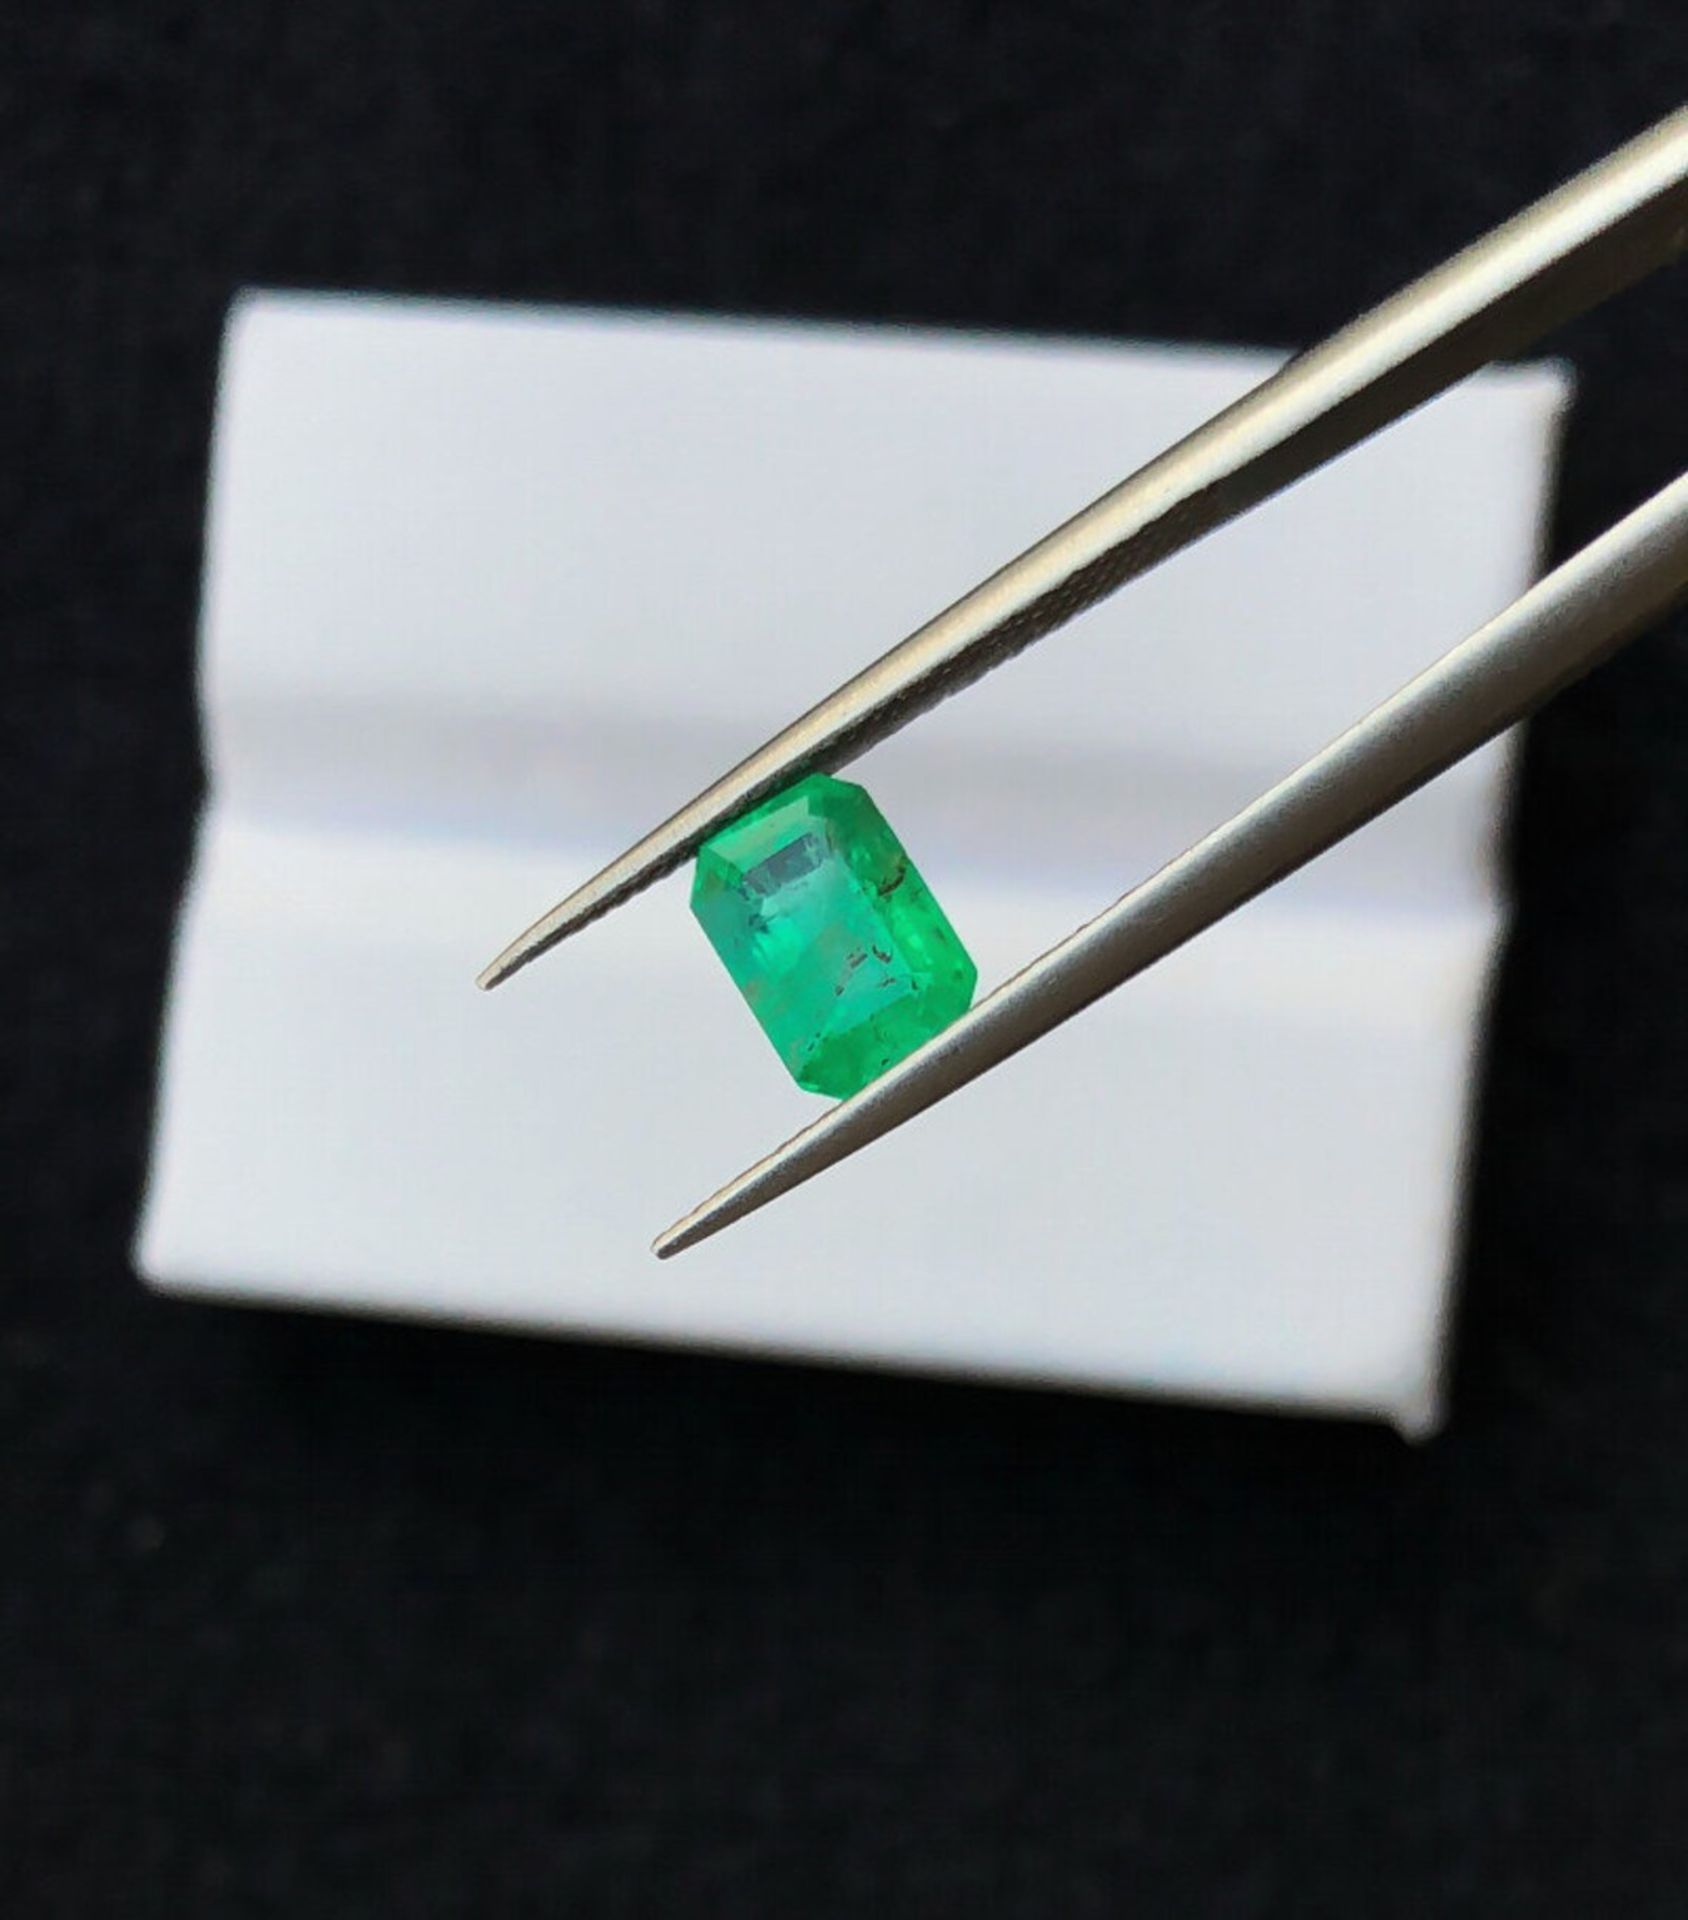 Certified Emerald 0.97Ct, Rectangular Step Cut Gemstone